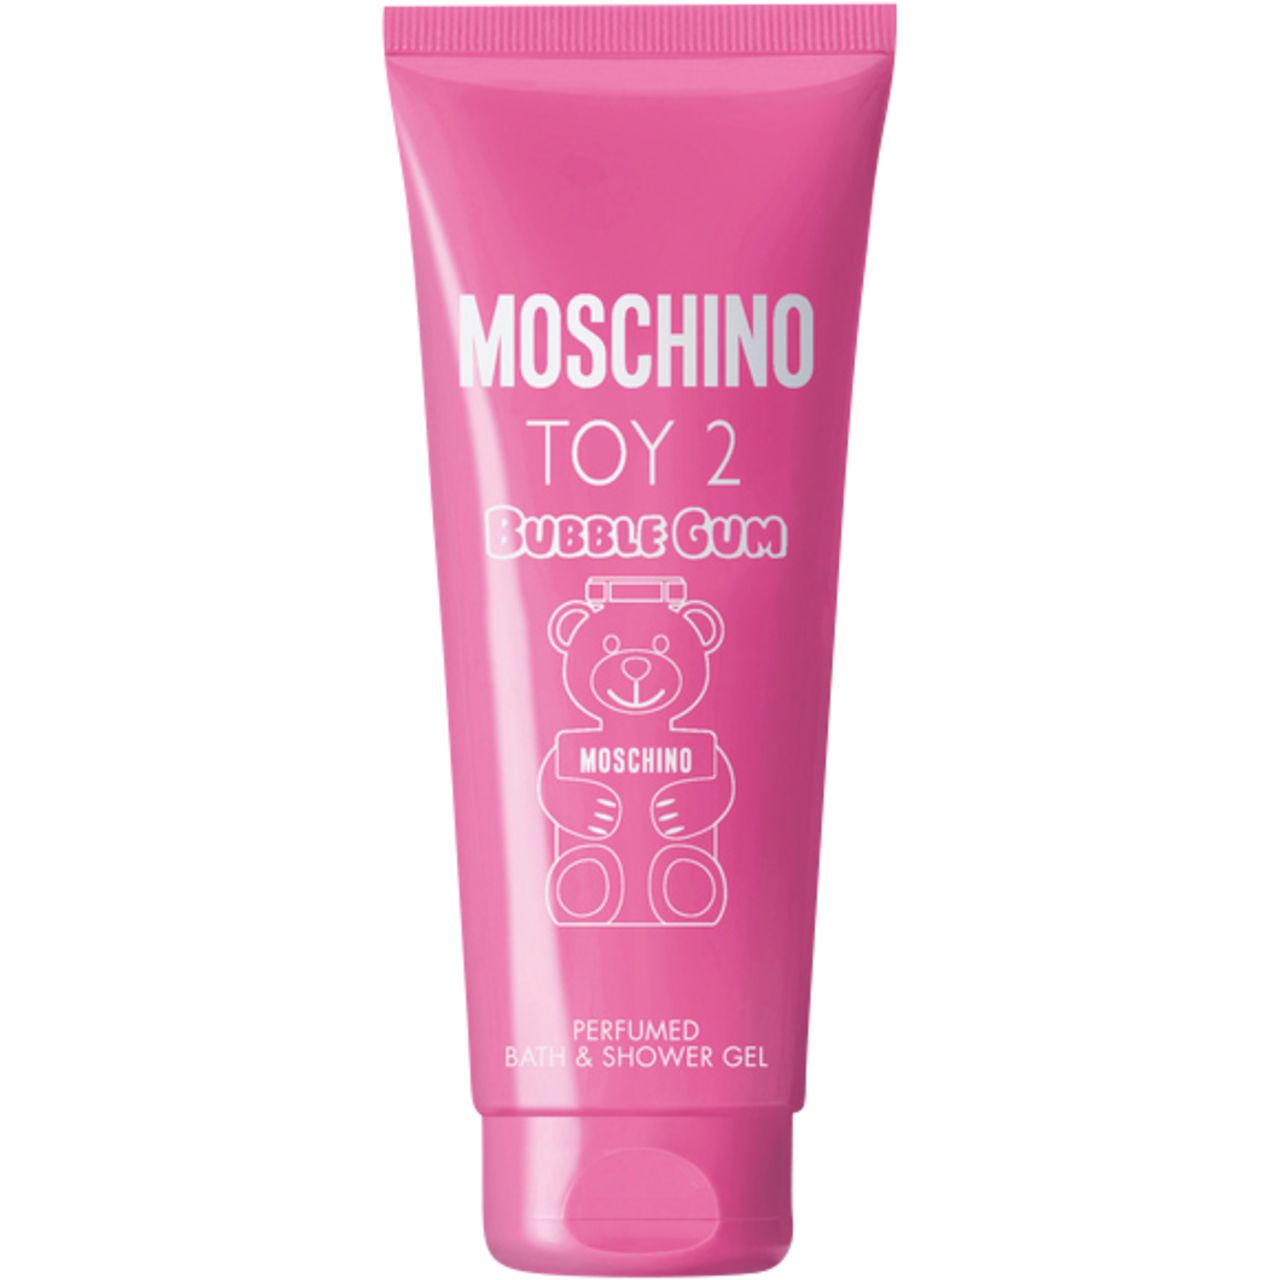 Moschino, Toy 2 Bubble Gum Shower Gel